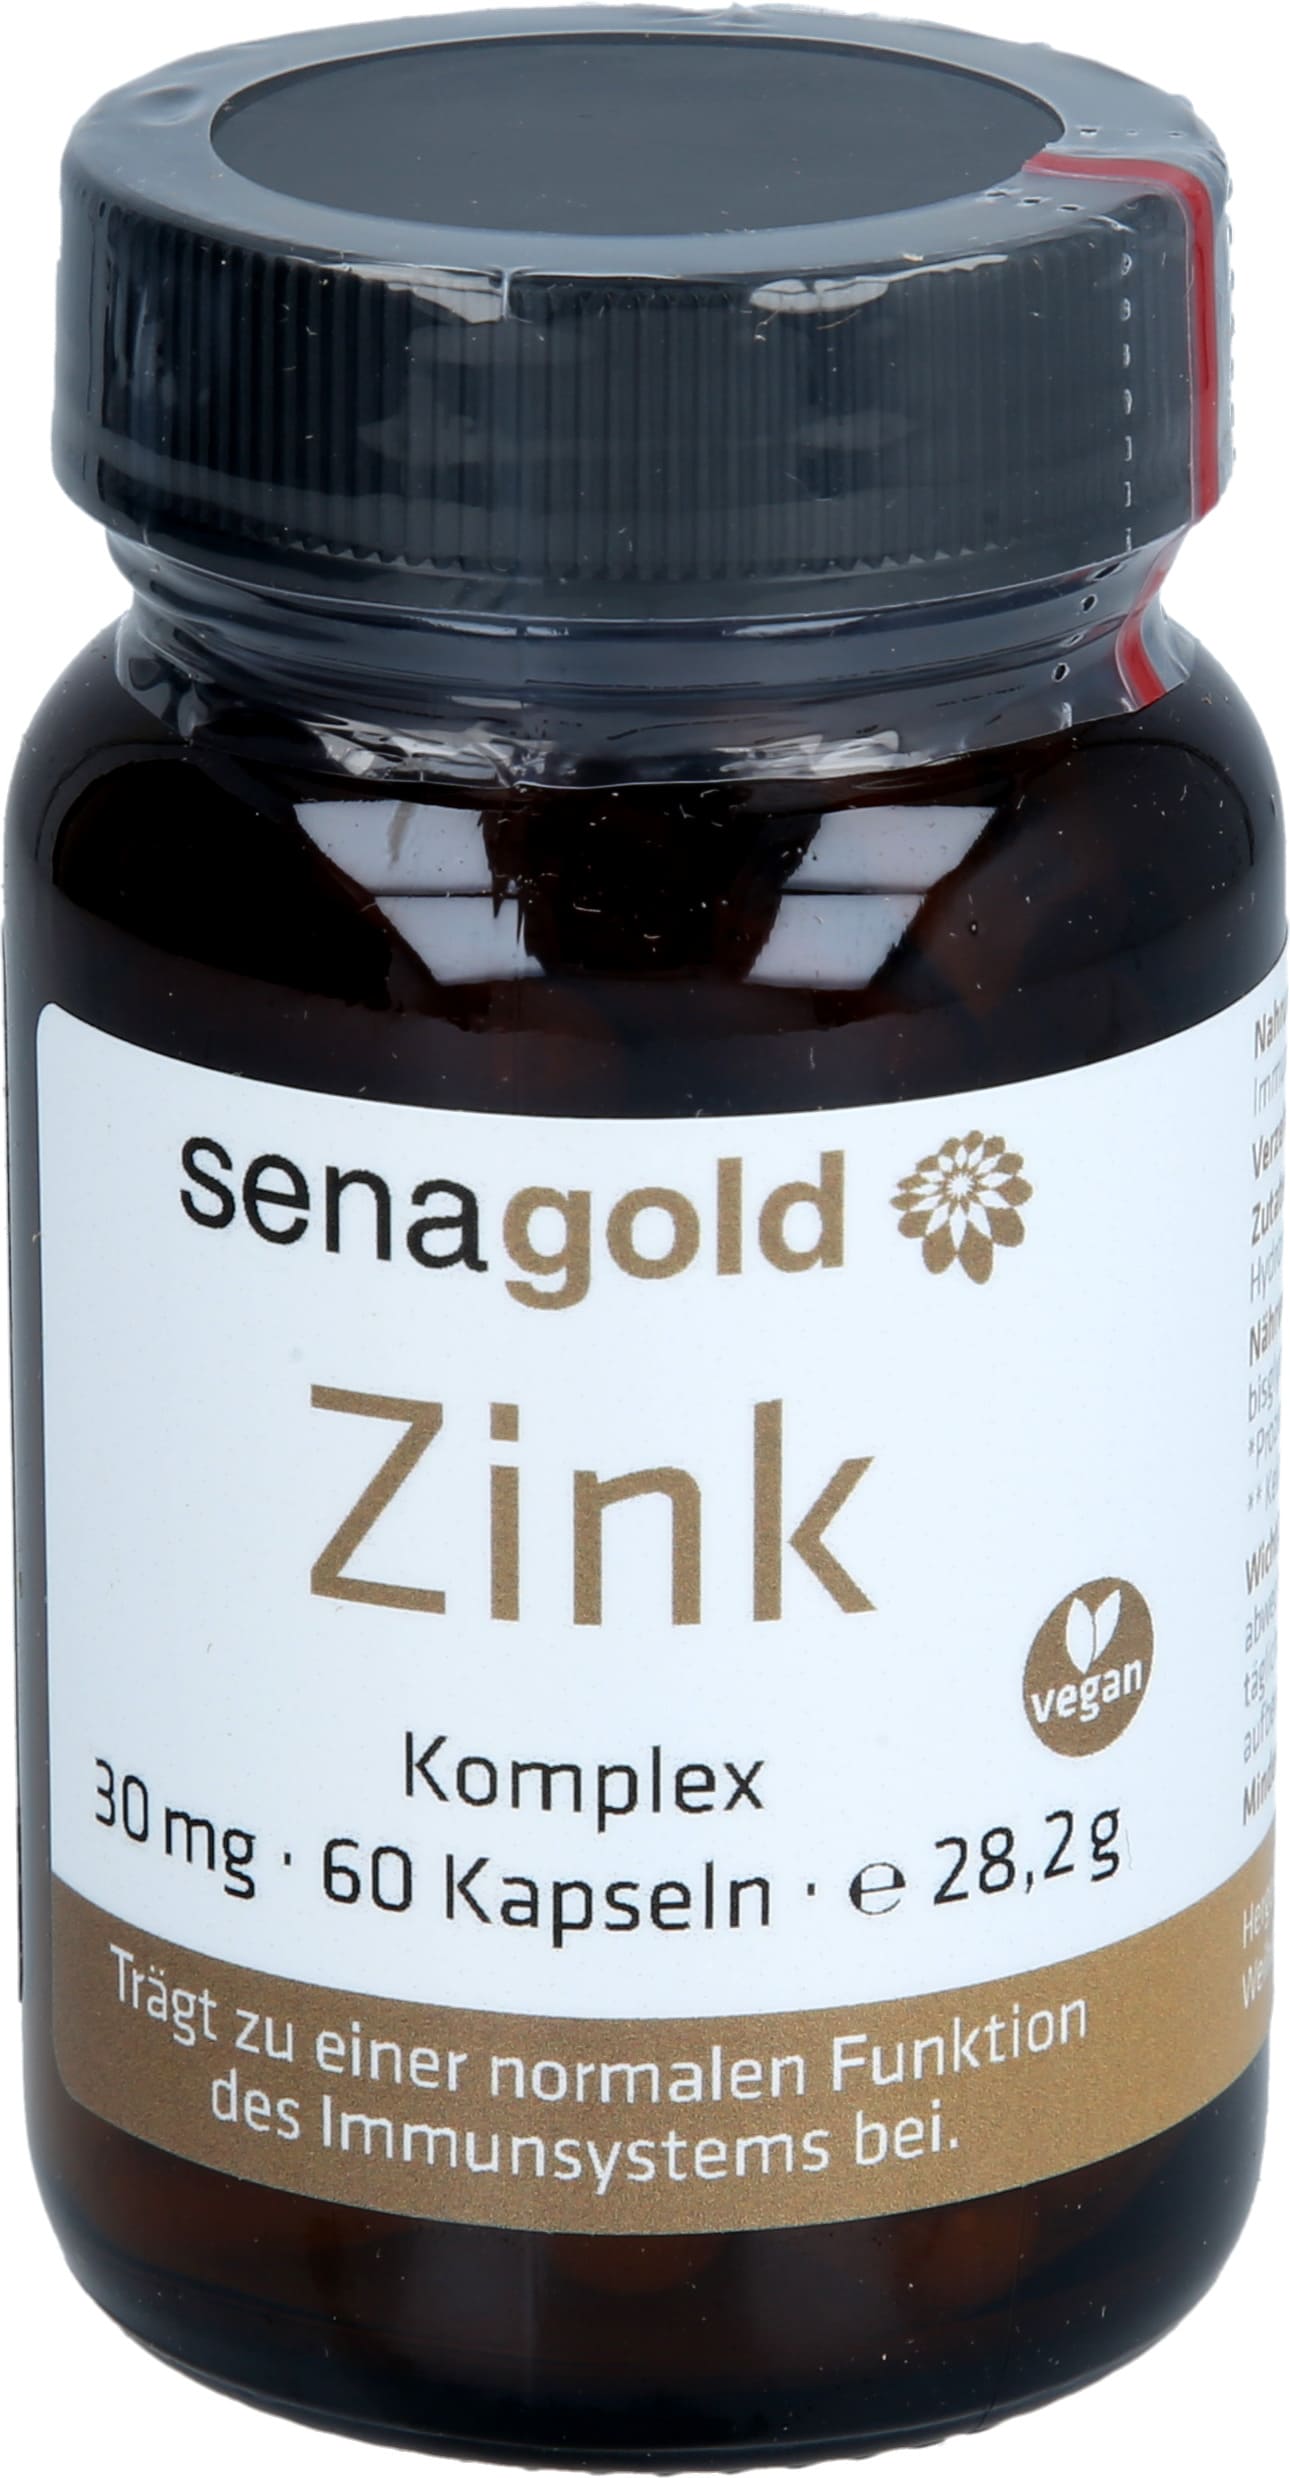 Senagold Zink Komplex Kapseln 30 mg - 3+1 Gratis